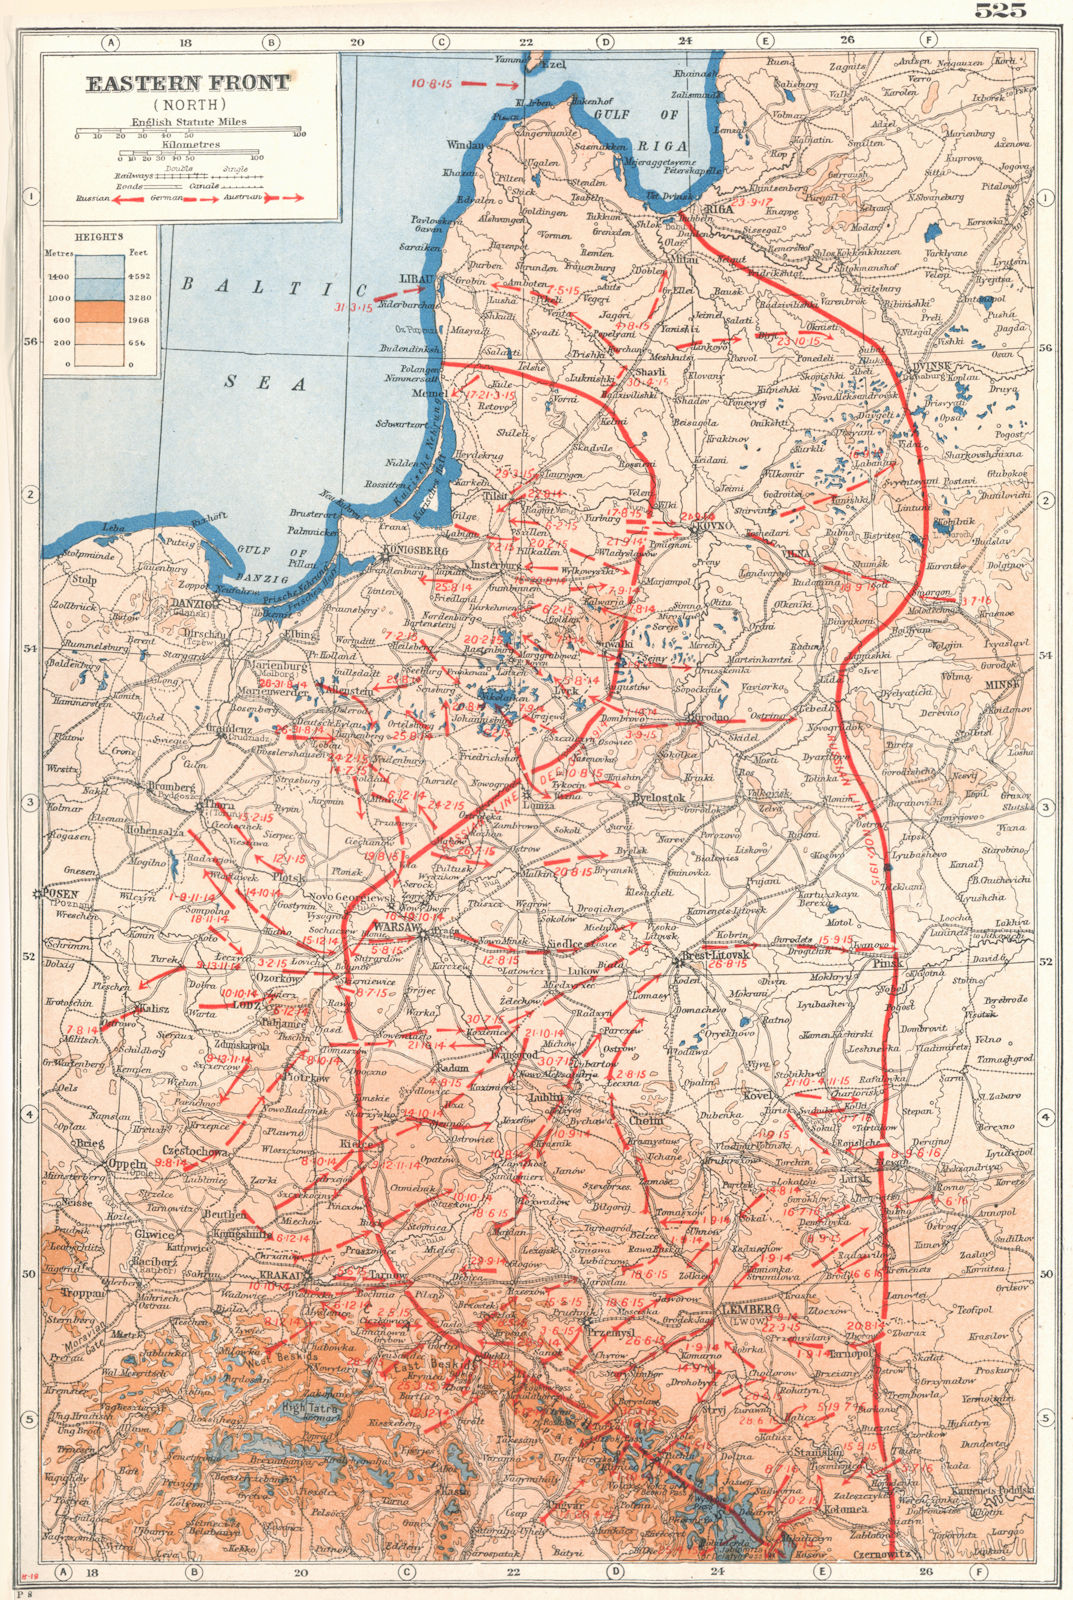 Associate Product WW1  EASTERN FRONT. Belarus Baltics Poland Battle lines 1914-16 1920 old map